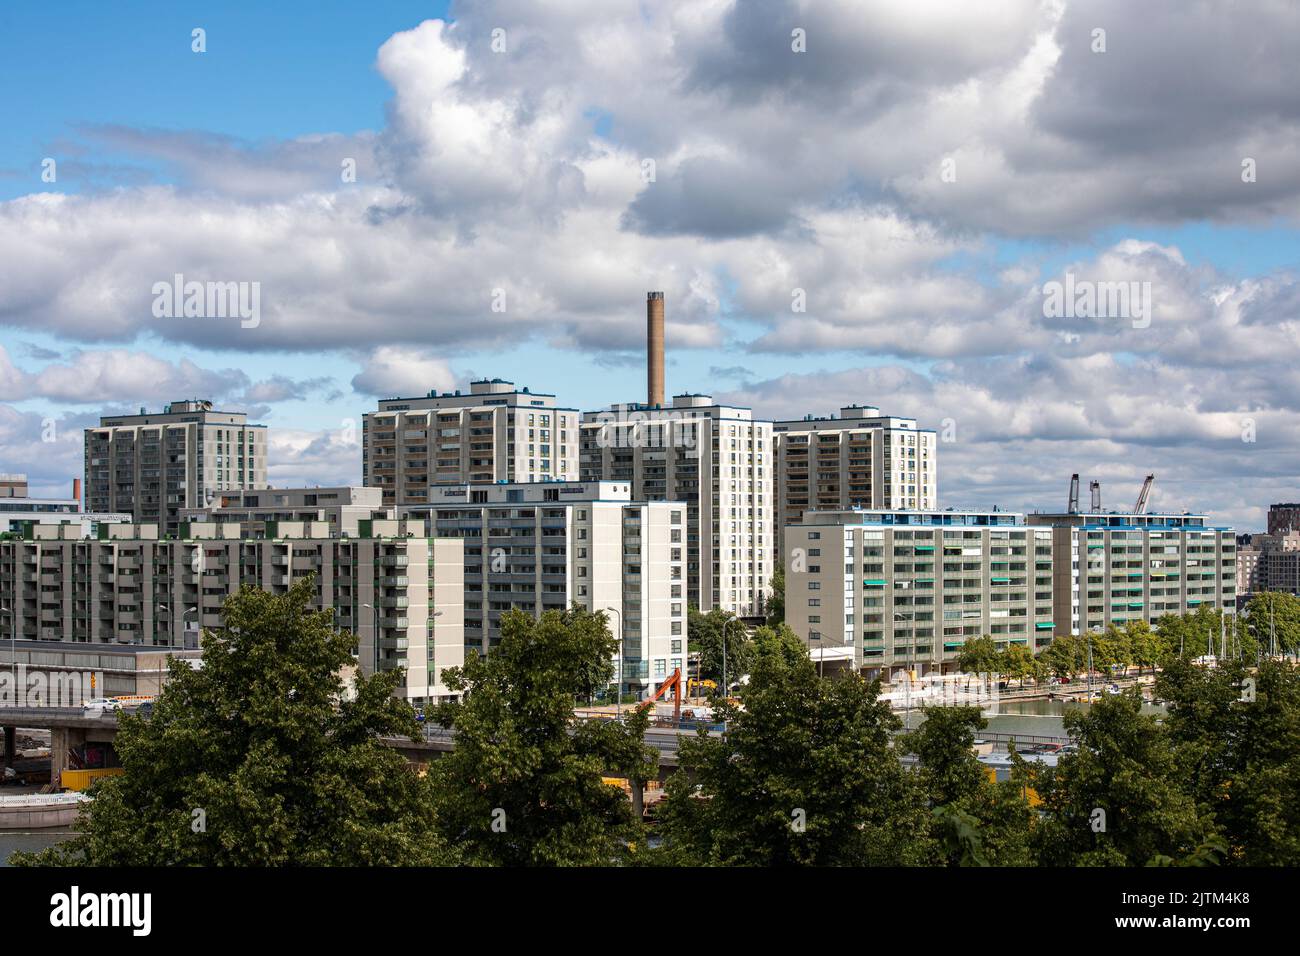 Residential Merihaka district in Helsinki, Finland Stock Photo